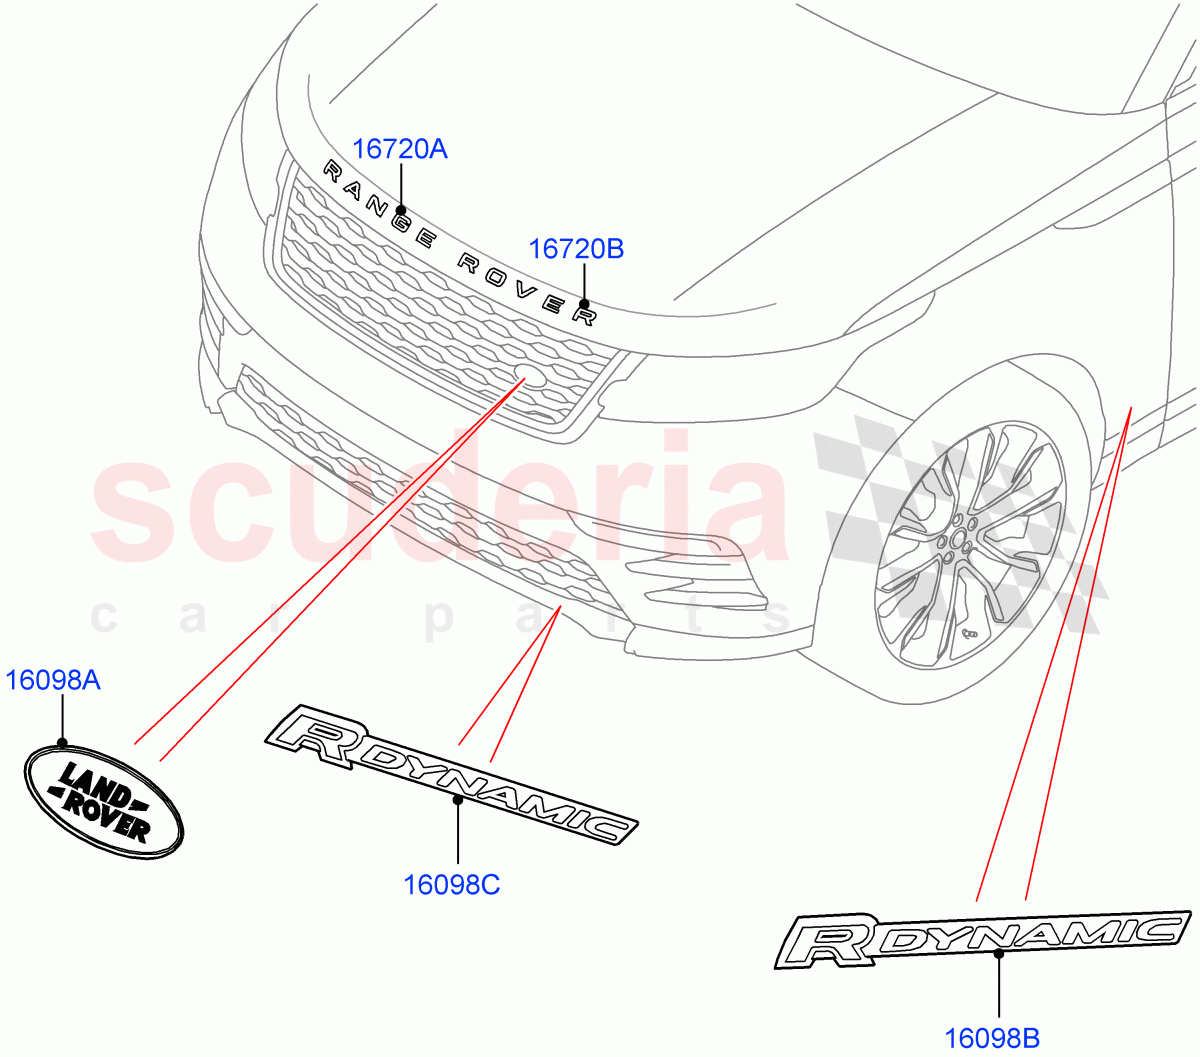 Name Plates(Front)(Version - Core,Version - R-Dynamic) of Land Rover Land Rover Range Rover Velar (2017+) [5.0 OHC SGDI SC V8 Petrol]